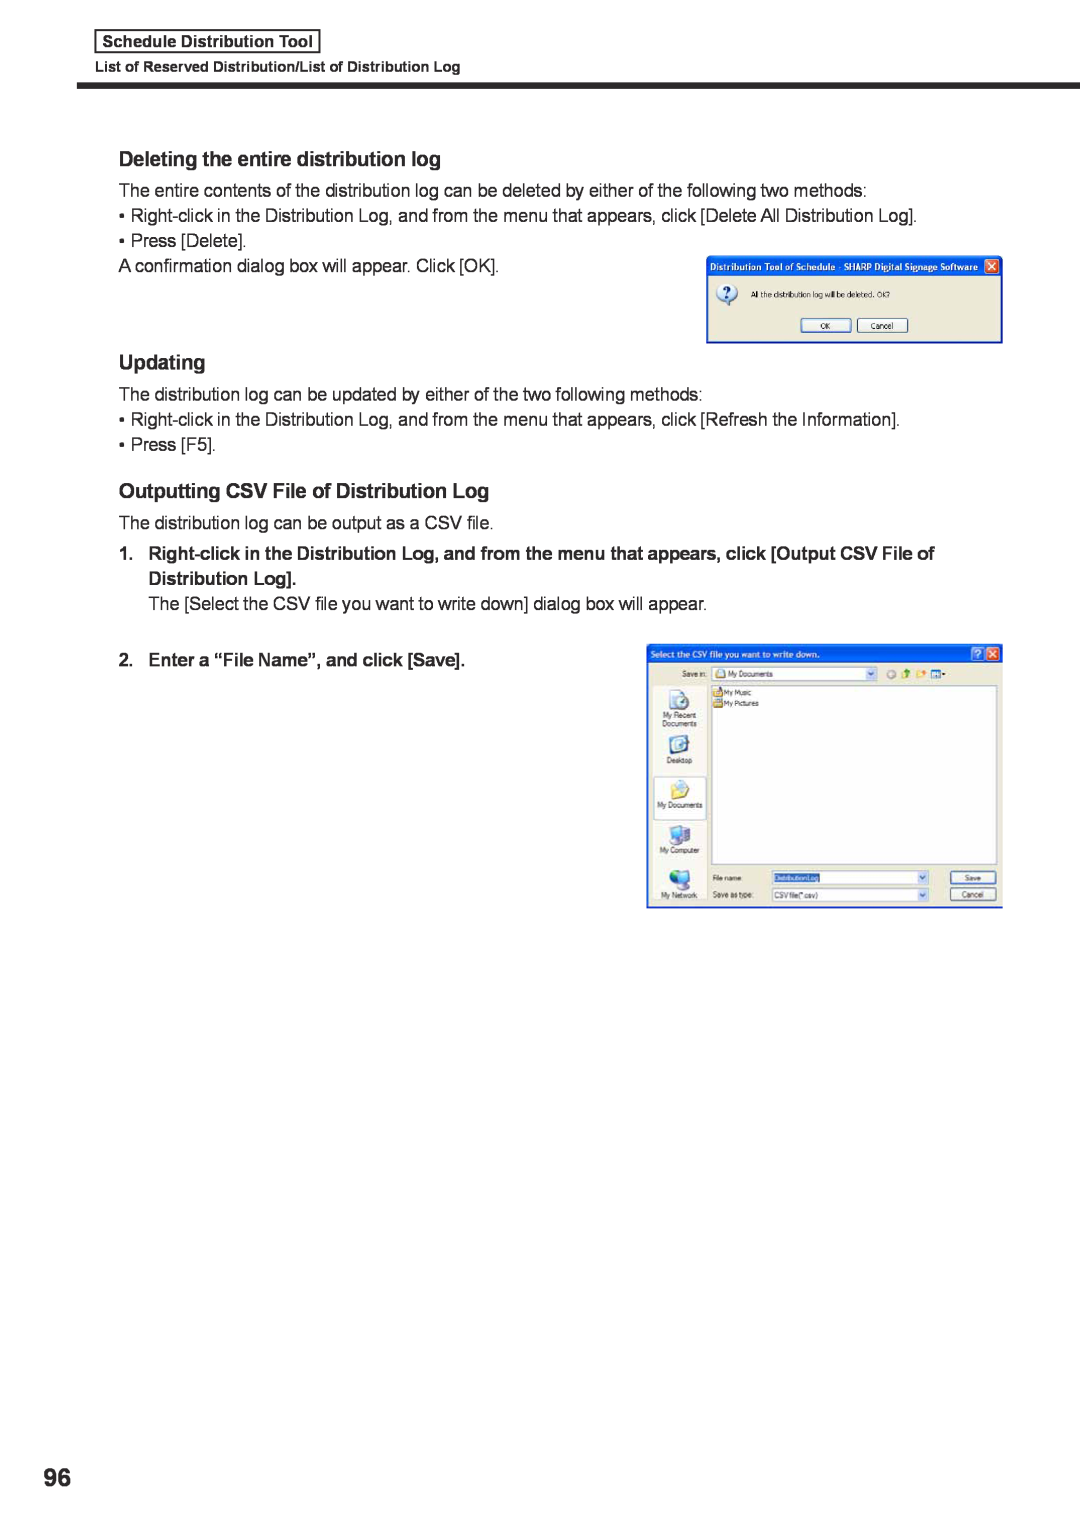 Sharp PNSV01 operation manual Deleting the entire distribution log, Outputting CSV File of Distribution Log, Updating 